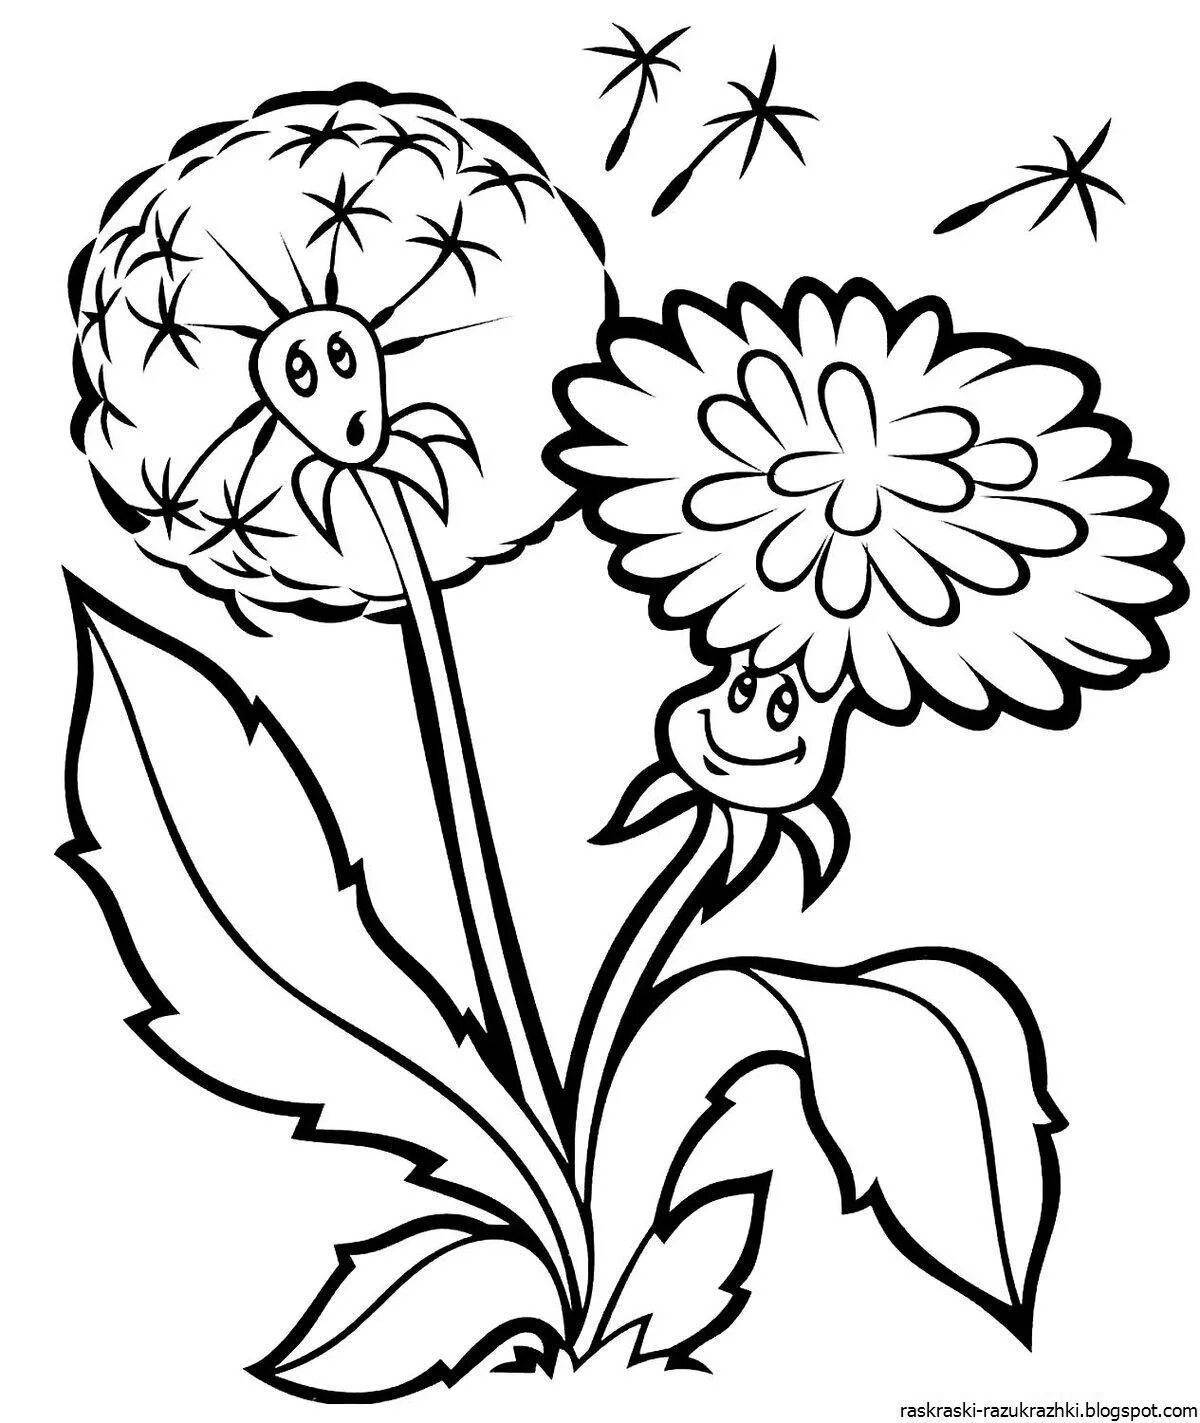 Cute dandelion coloring book for kids